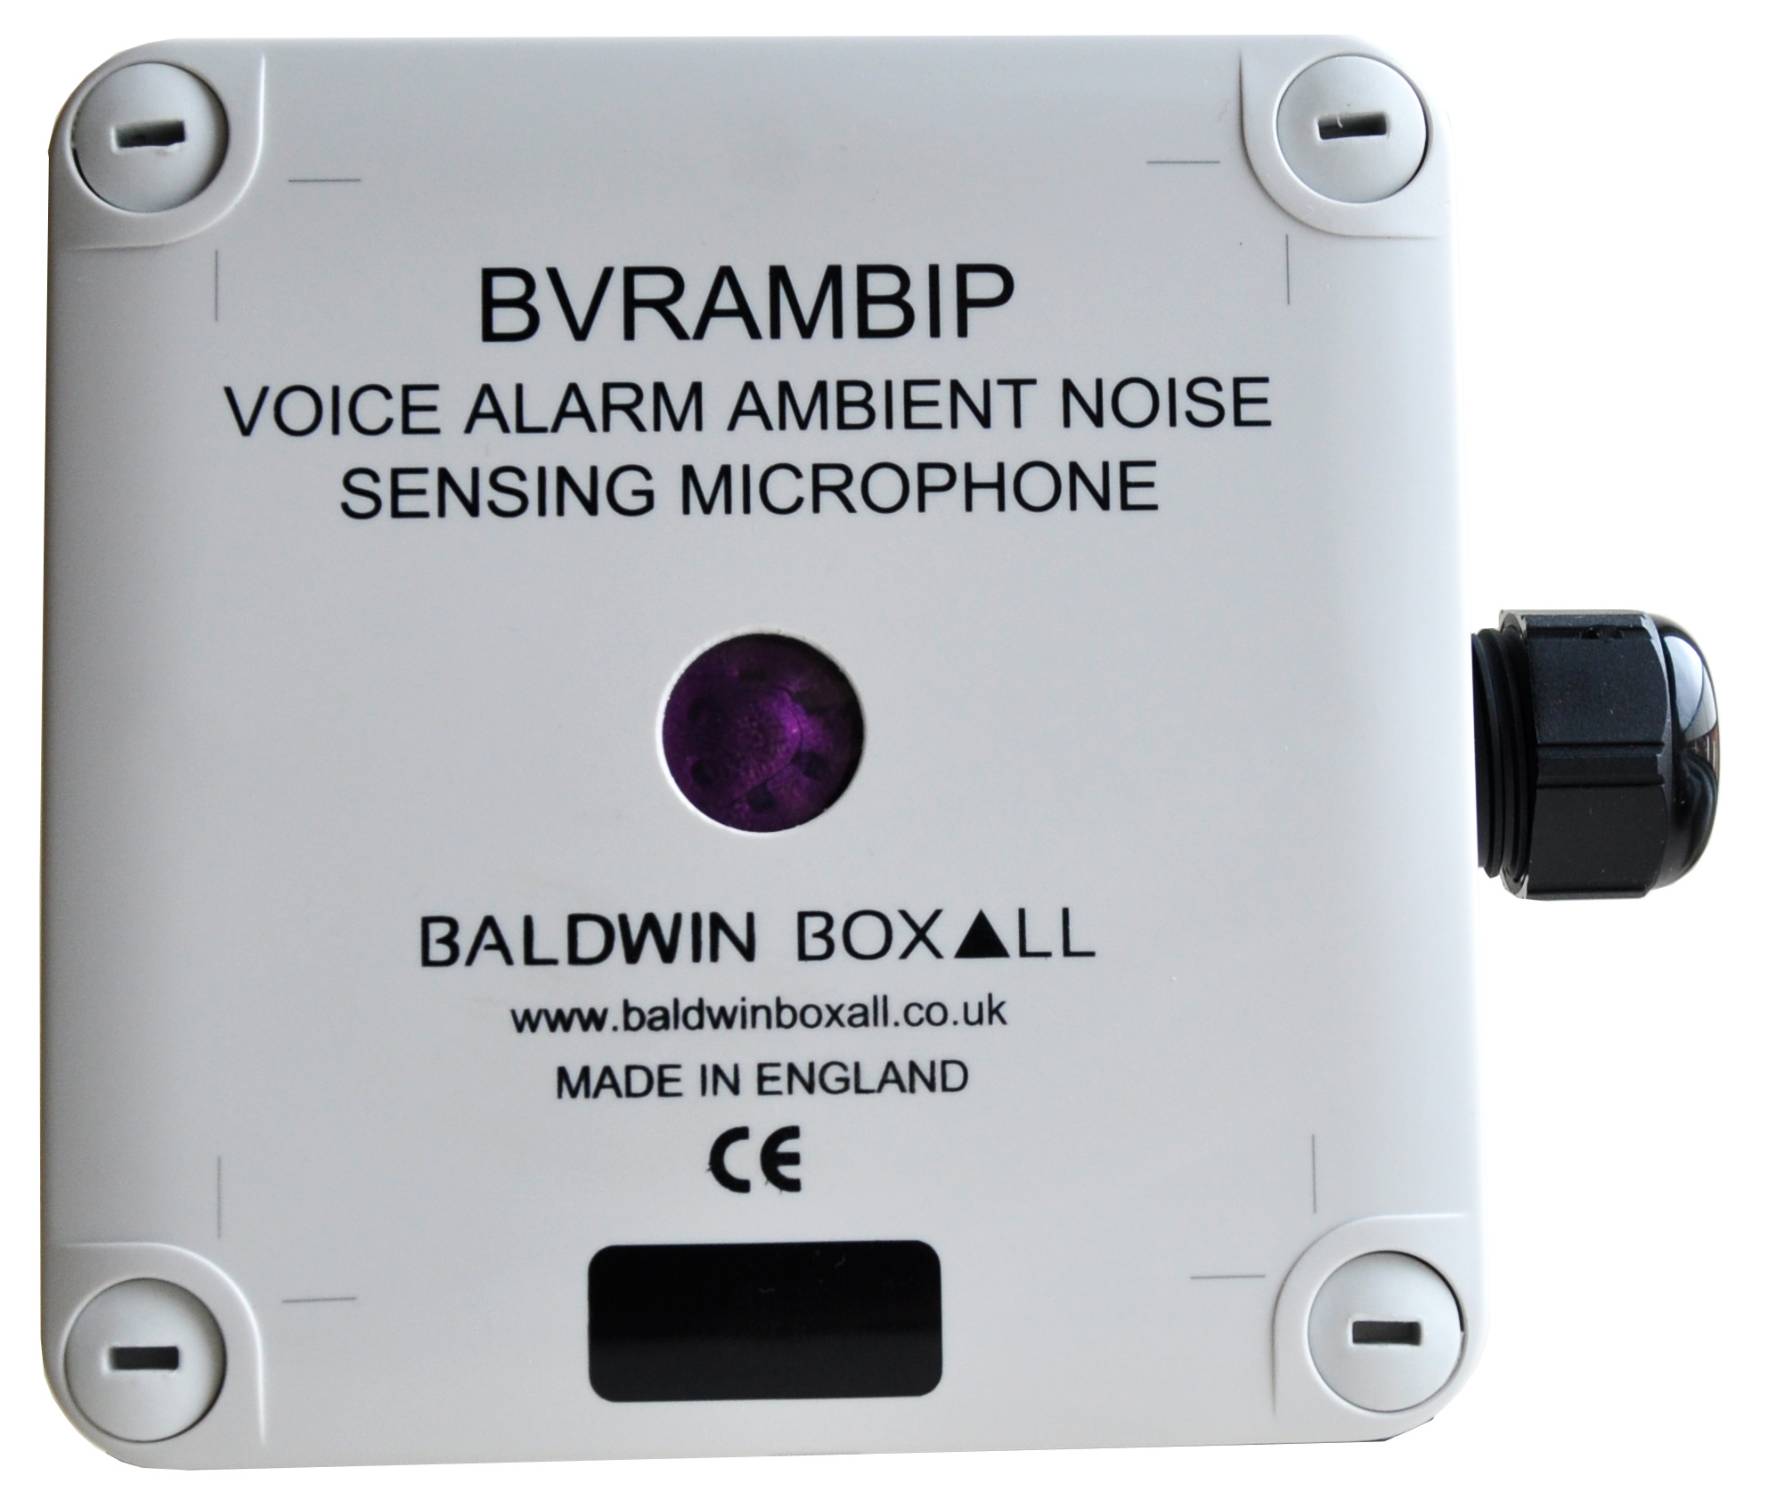 Ambient Noise Sensing (BVRAMBIP)